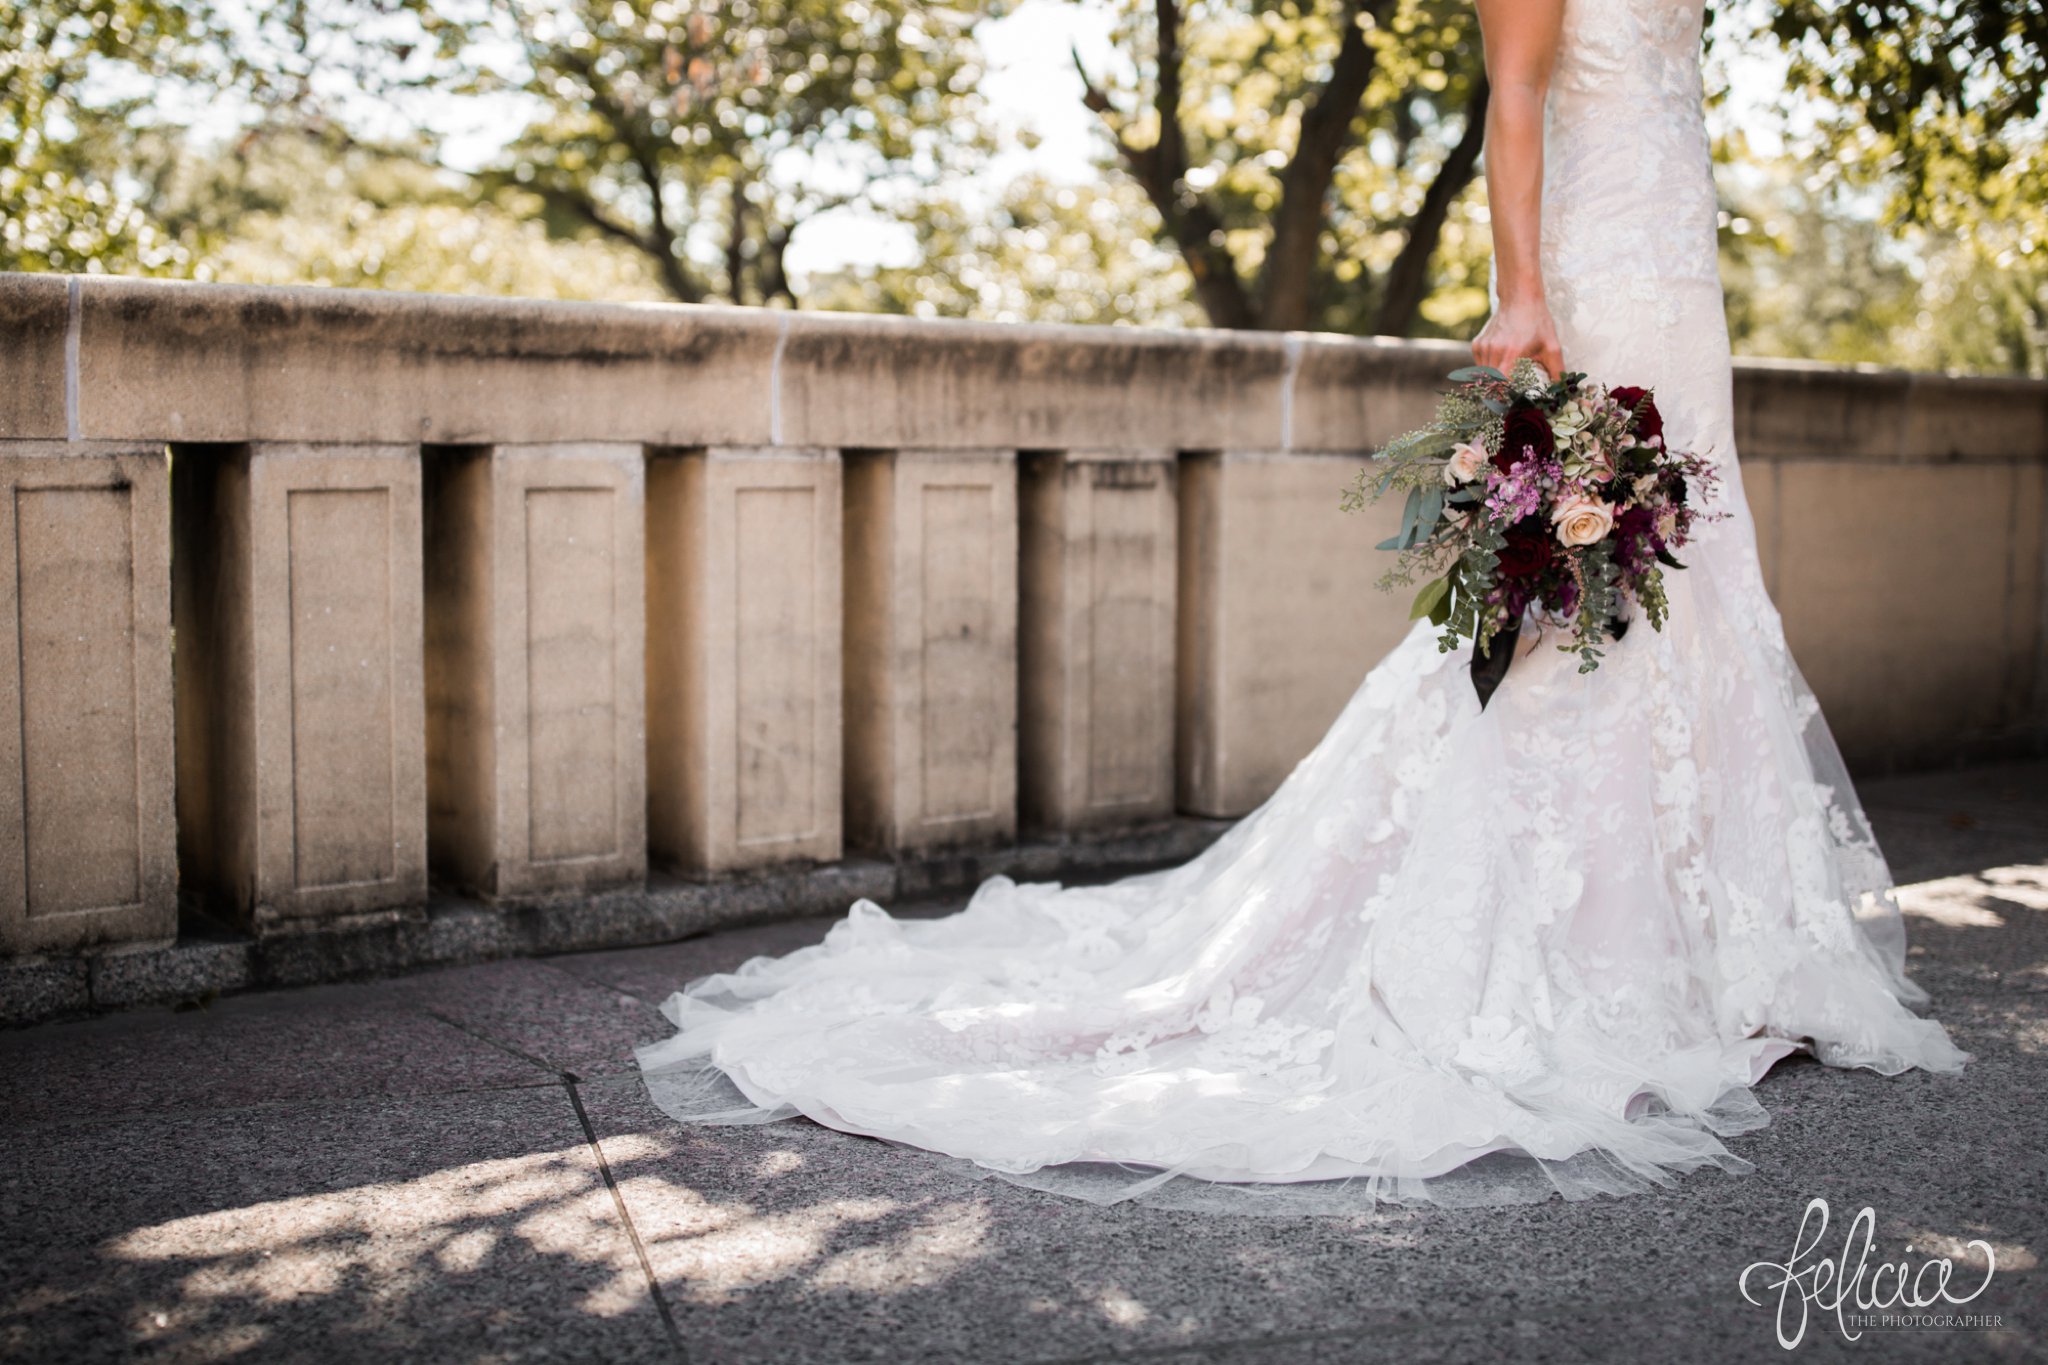 images by feliciathephotographer.com | wedding photographer | kansas city | details | long train | lace floral gown | emily hart | burgundy flowers | nelson atkins art museum | stone | 